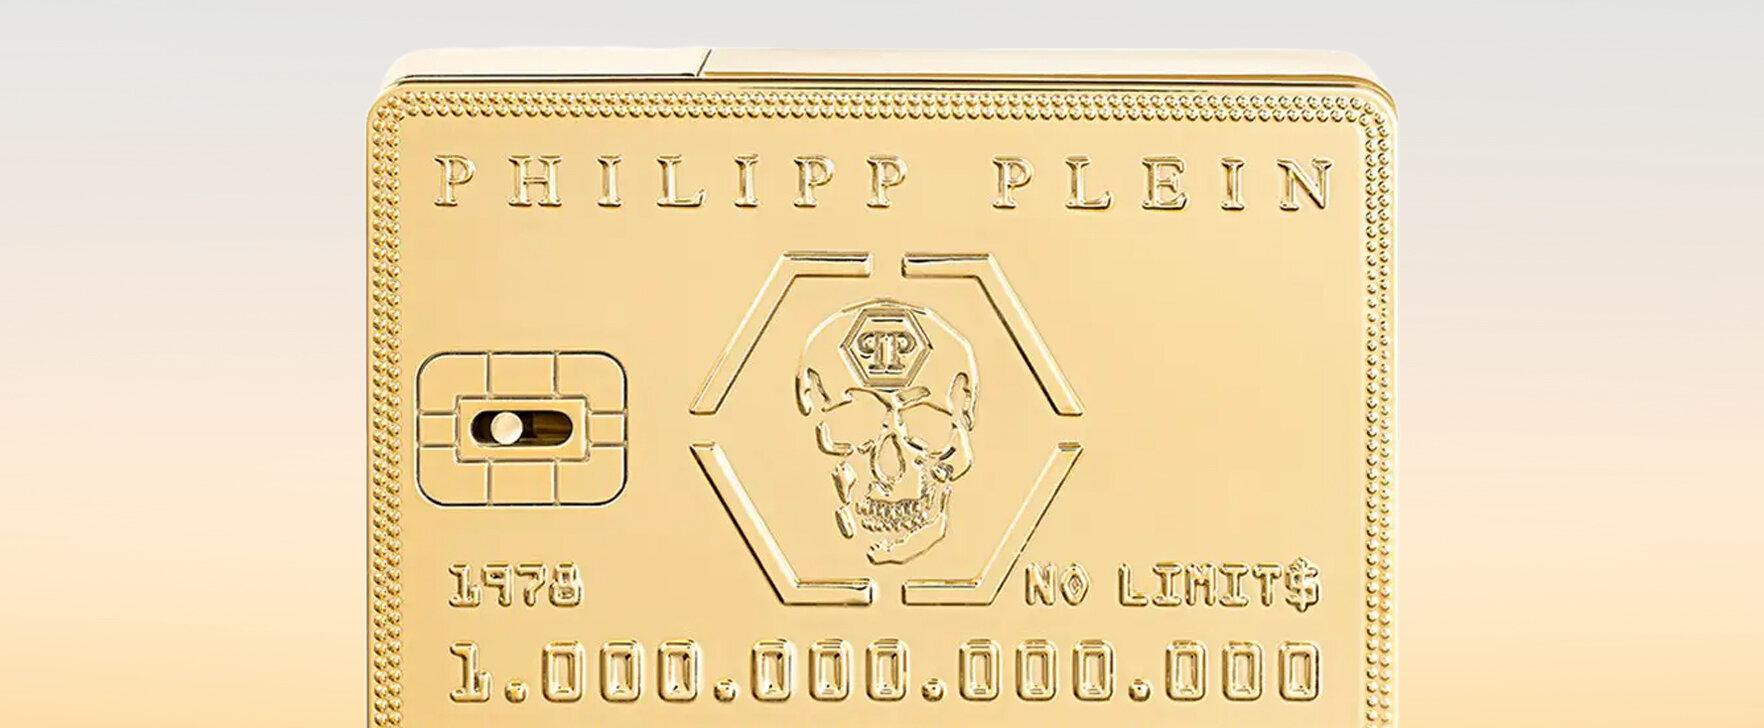 An Ode to Luxury: The New Eau de Parfum "No Limit$ Gold" by Philipp Plein